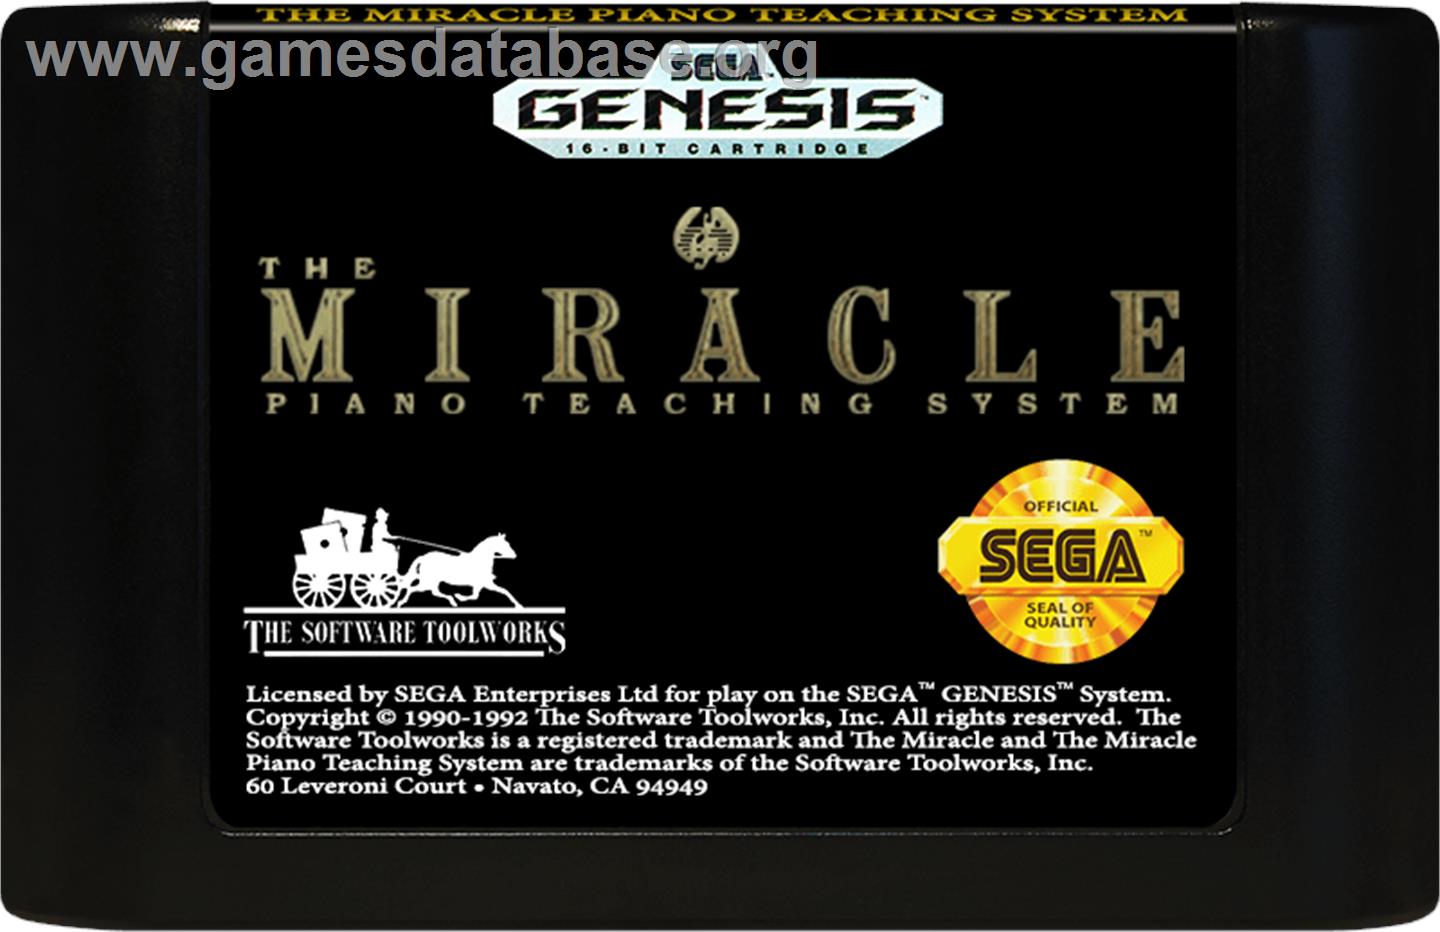 Miracle Piano Teaching System - Sega Genesis - Artwork - Cartridge